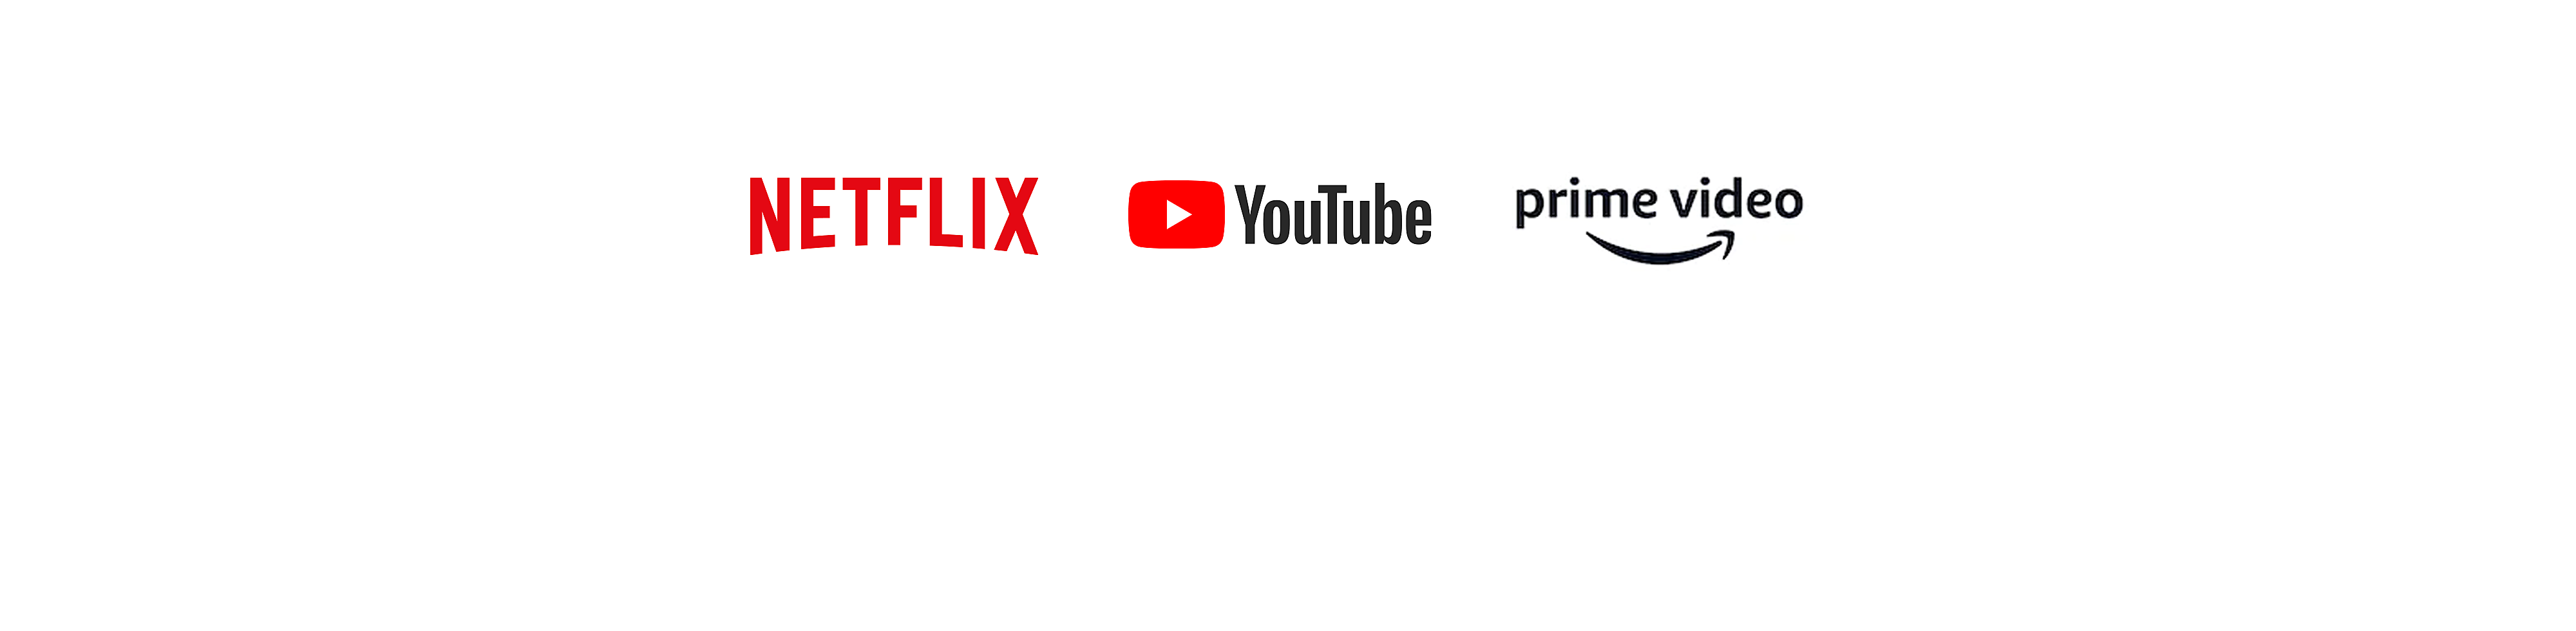 Logótipos Netflix, YouTube e Amazon Prime Video